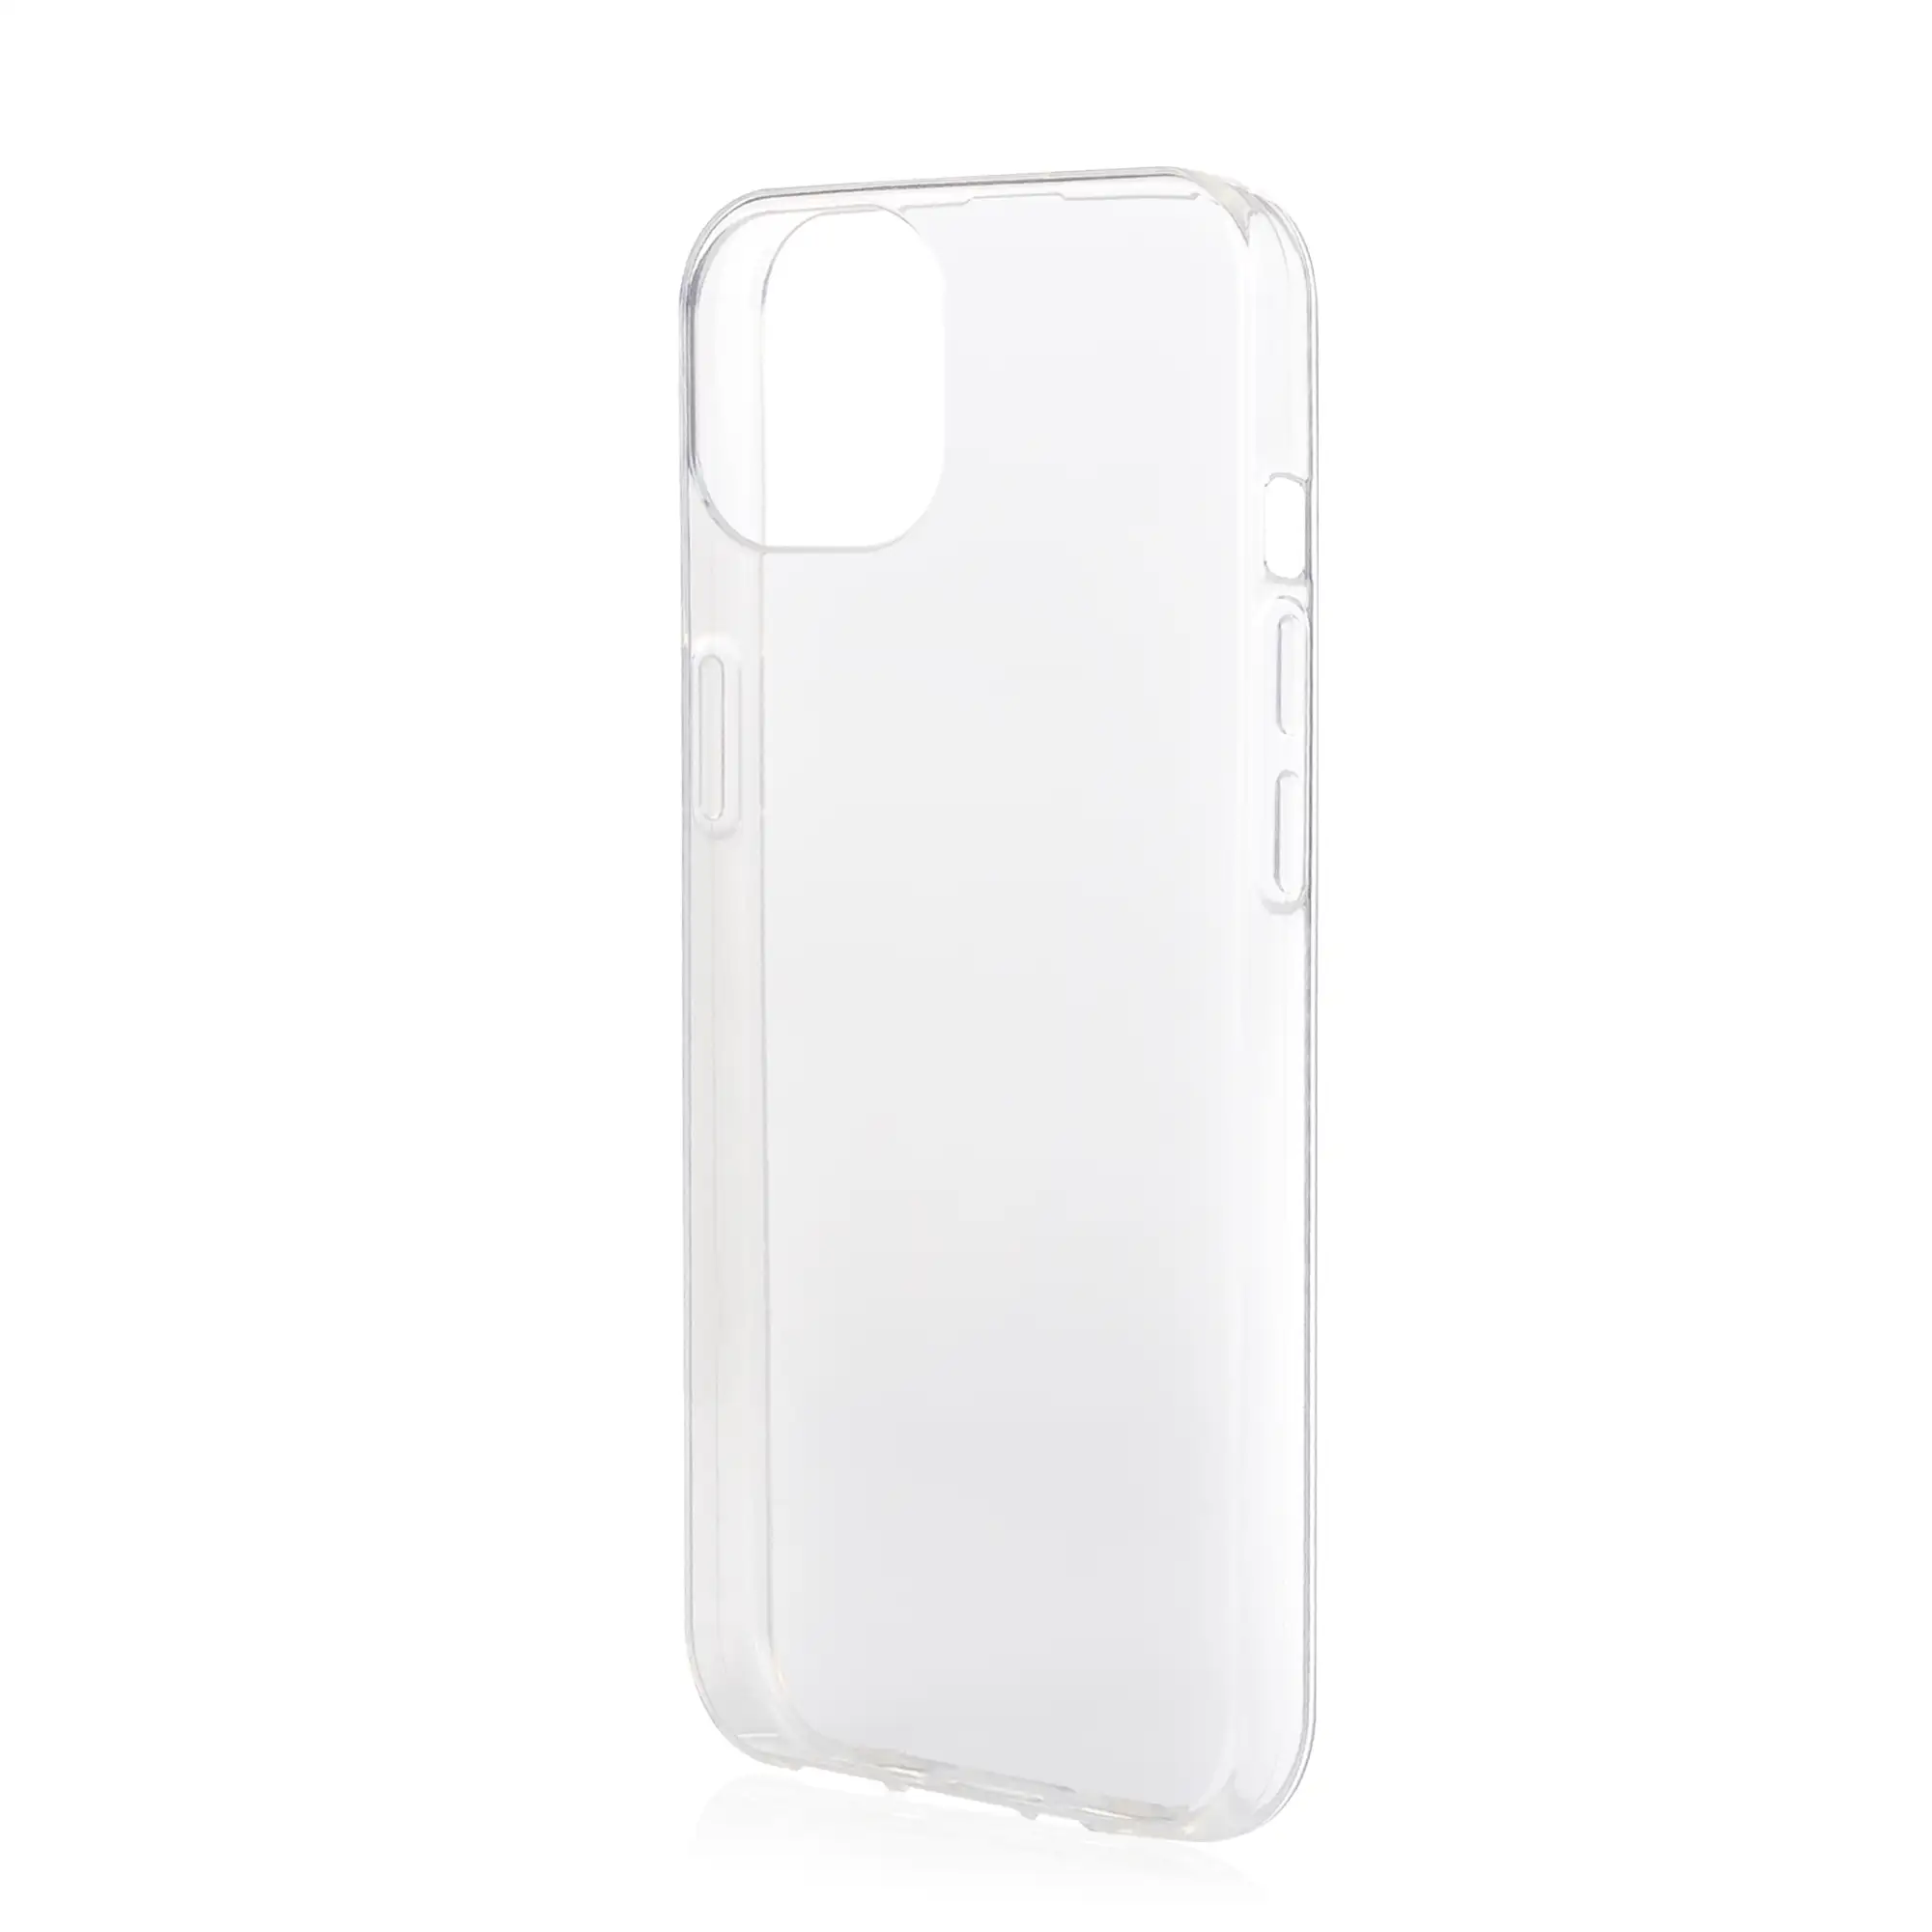 Carcasa Slim Crystal Clear de TPU transparente para iPhone 13.